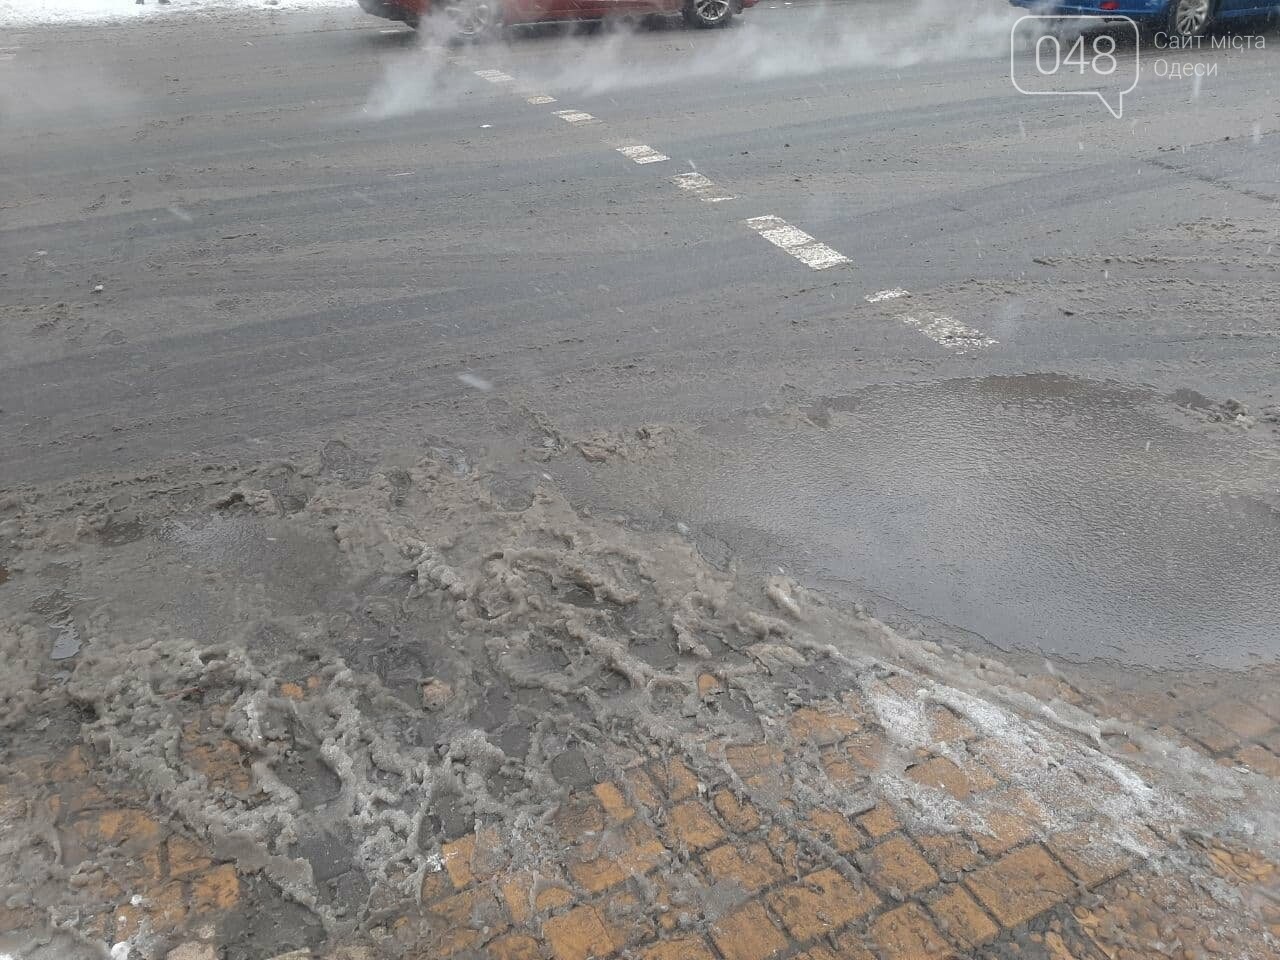 Одессу замело: ситуация на дорогах и тротуарах в городе, - ФОТО, фото-5